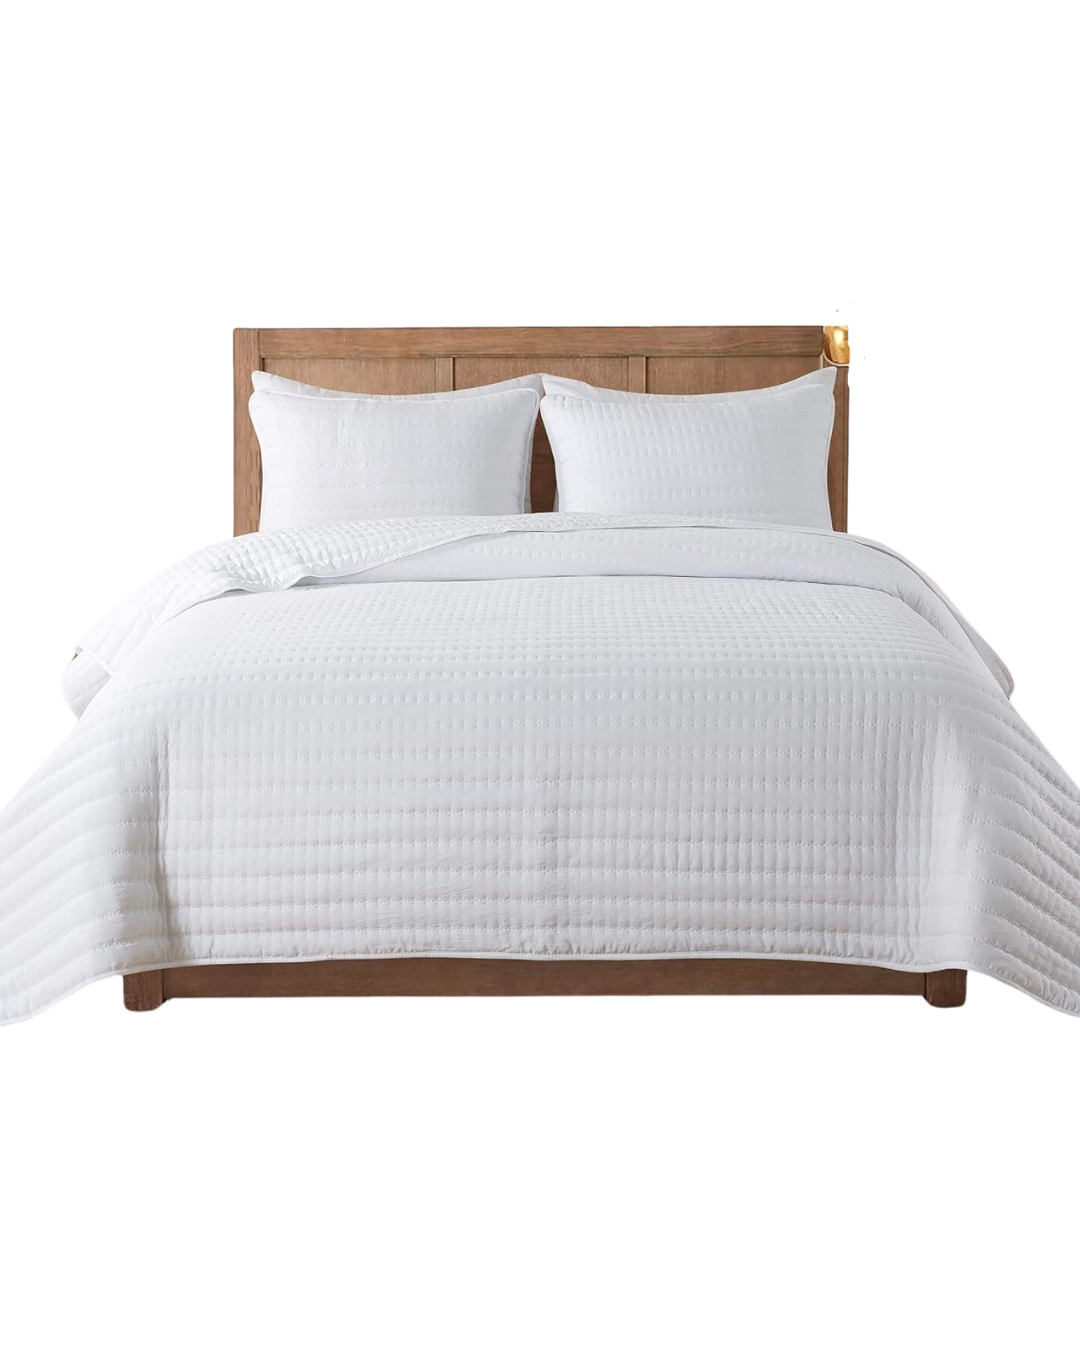 amazon bedding, quilt set, affordable bedding